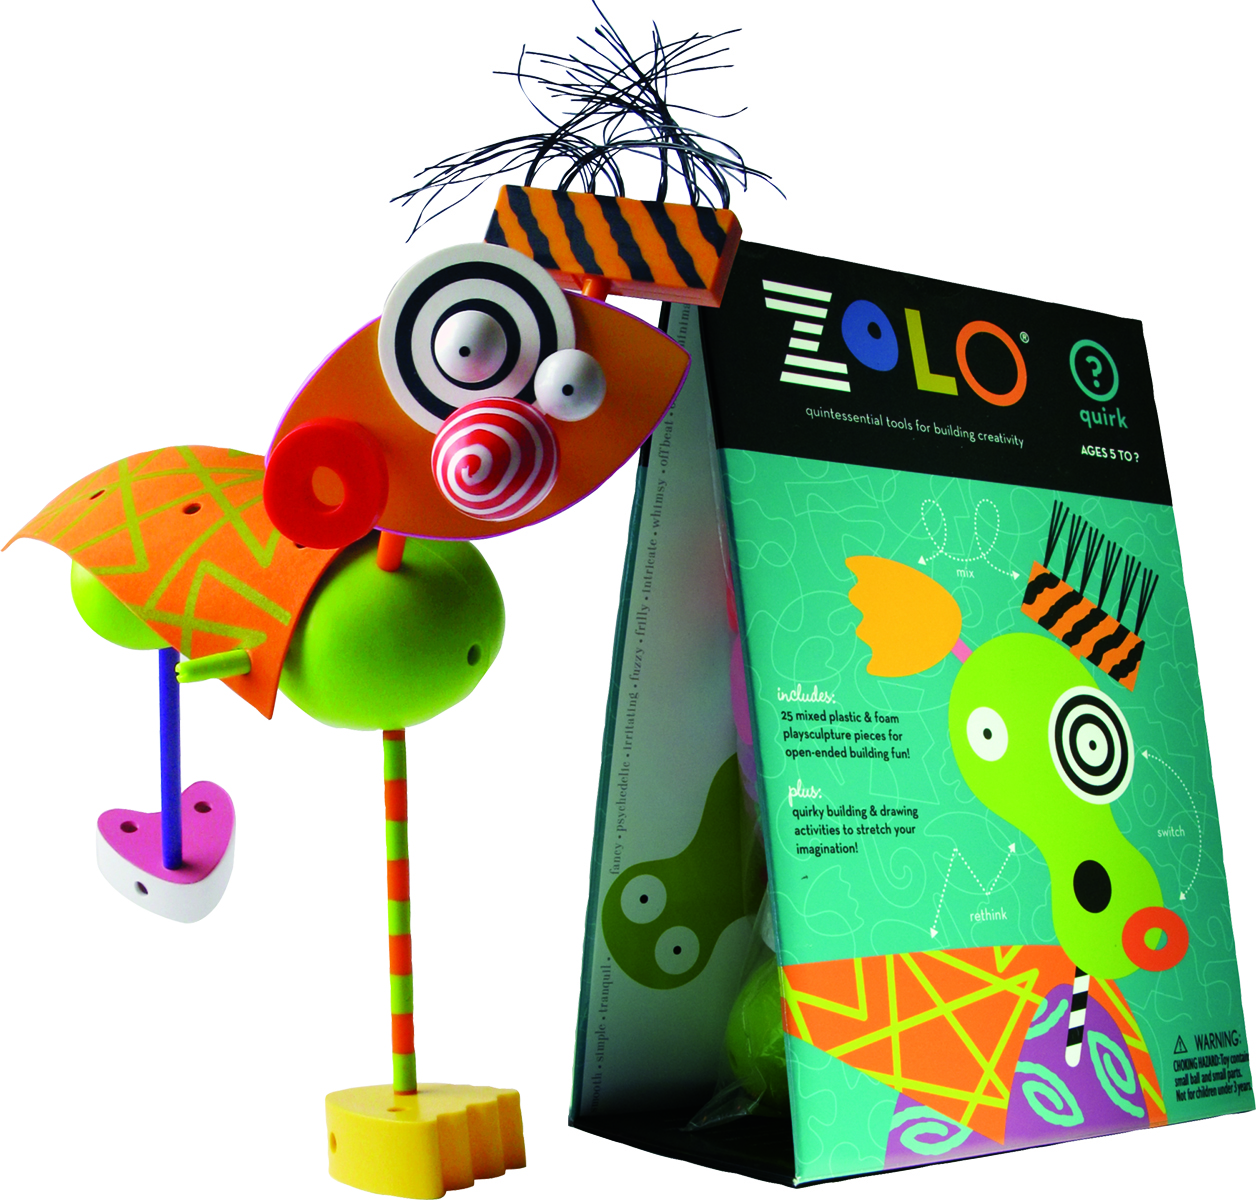 ZoLO Risk Creativity Playsculpture 